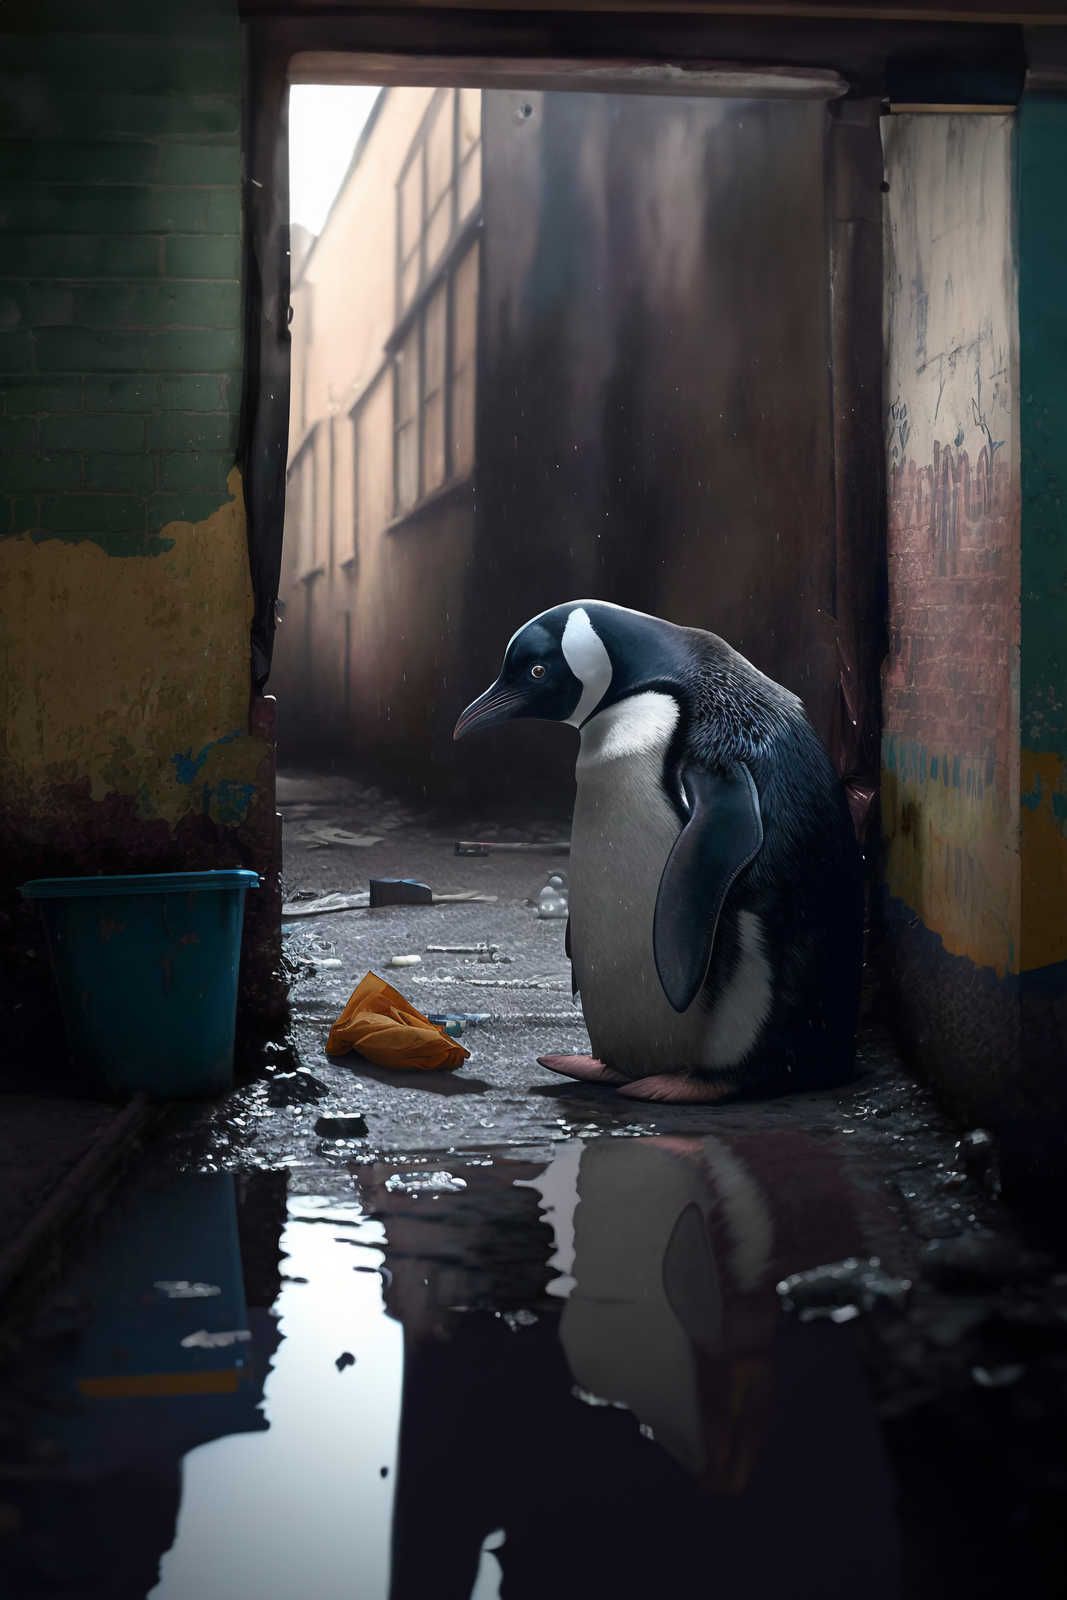             KI Canvas schilderij »verloren pinguïn« - 60 cm x 90 cm
        